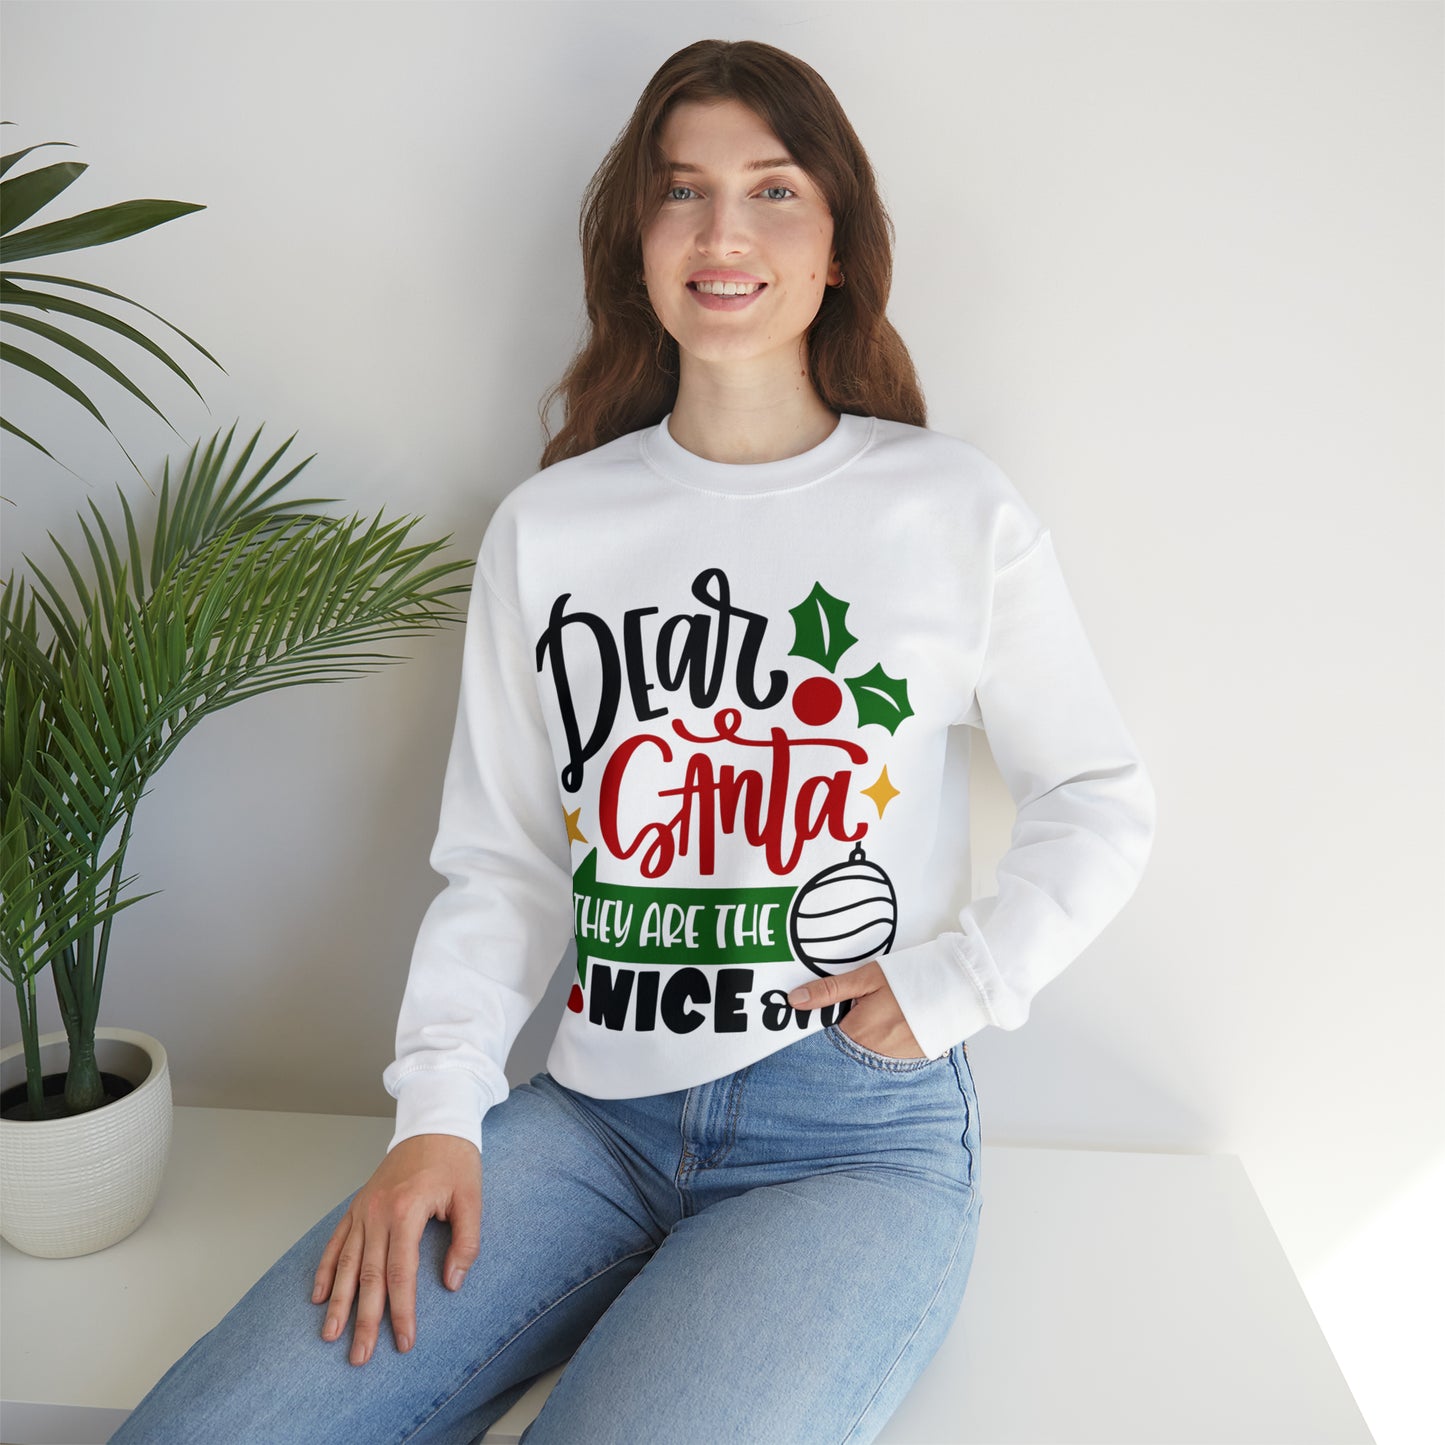 Dear Santa They Are the Nice Ones Unisex Sweatshirt, Funny T-shirt, Unisex Tee, Christmas Shirt, Christmas Slogan Shirts, Christmas Sweater